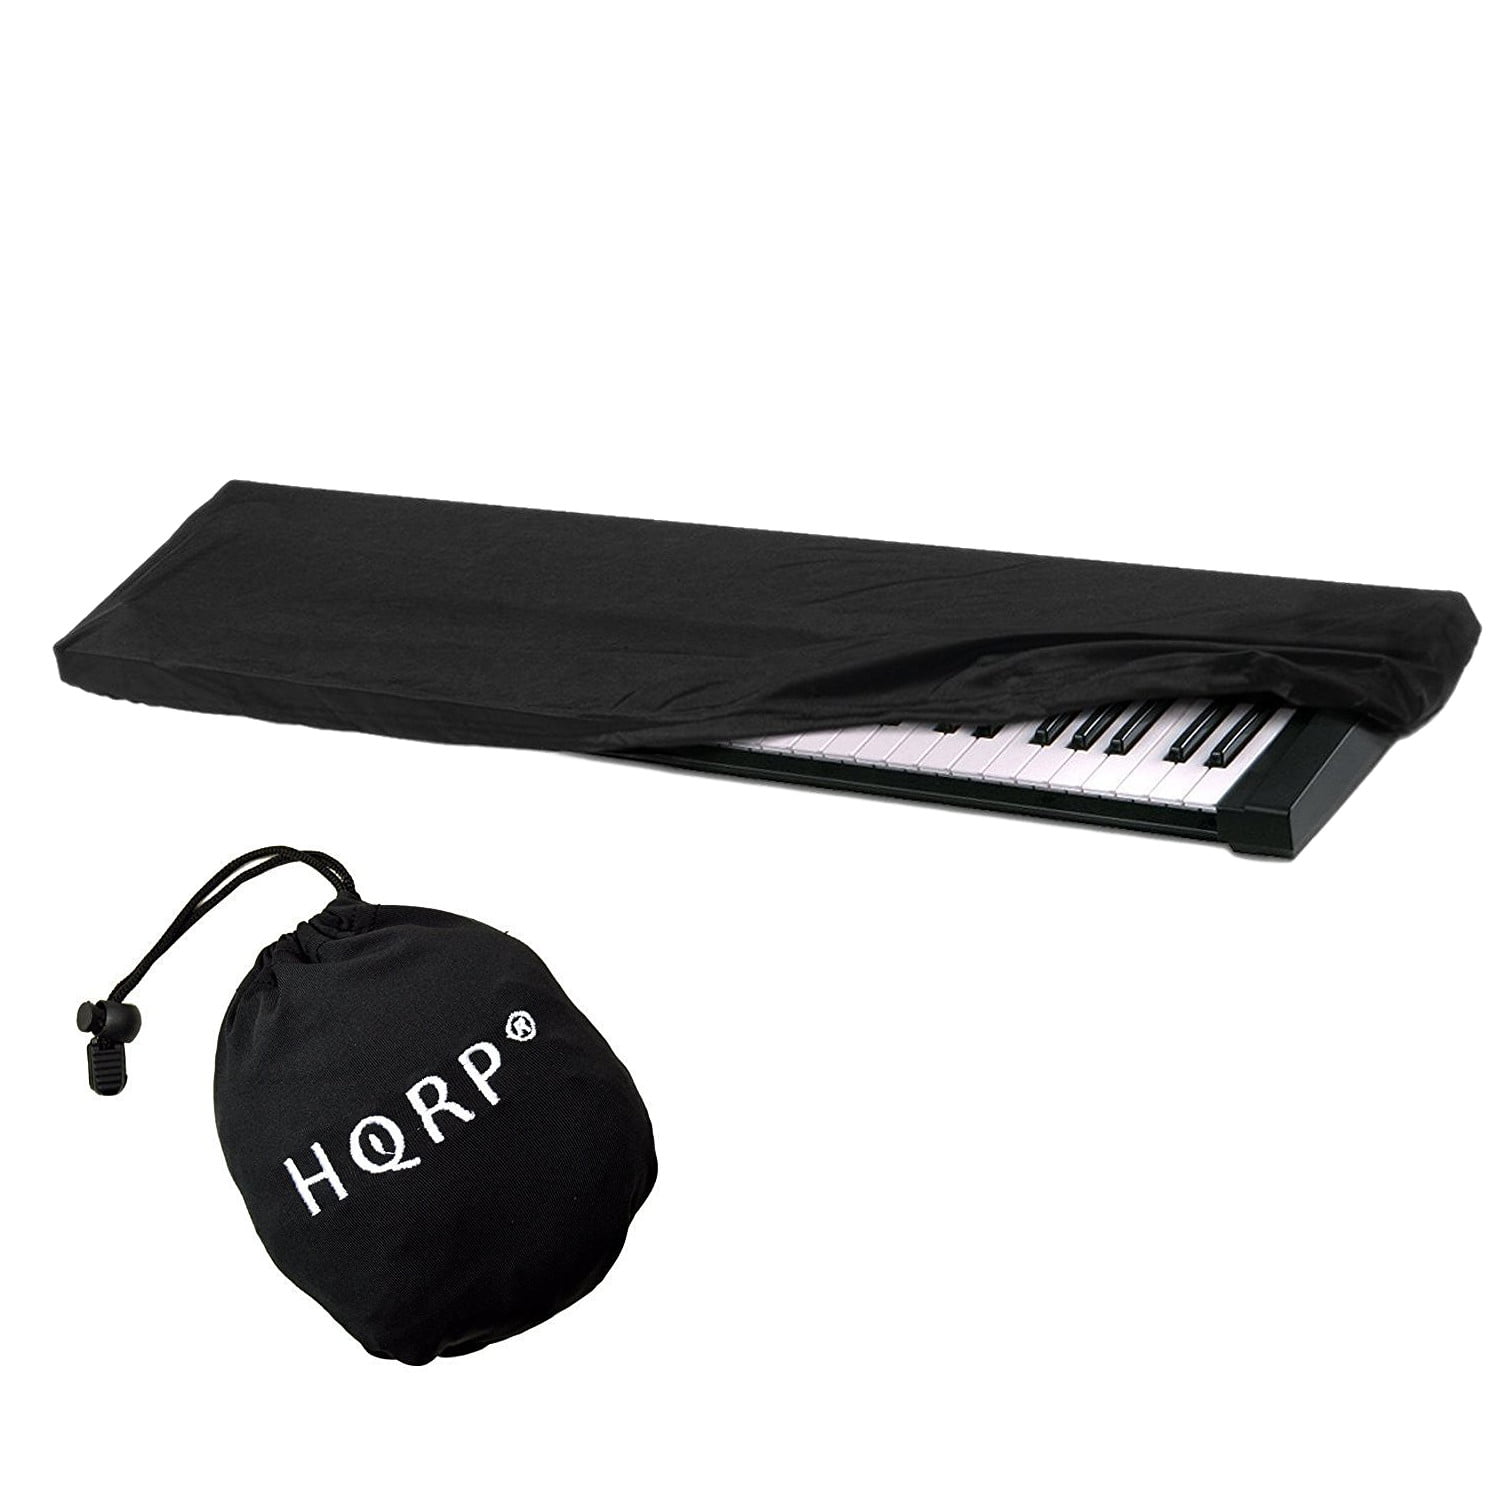 Akai Keys Keyboard Protection Piano Keyboard Protector Electronic Keyboard Cover 